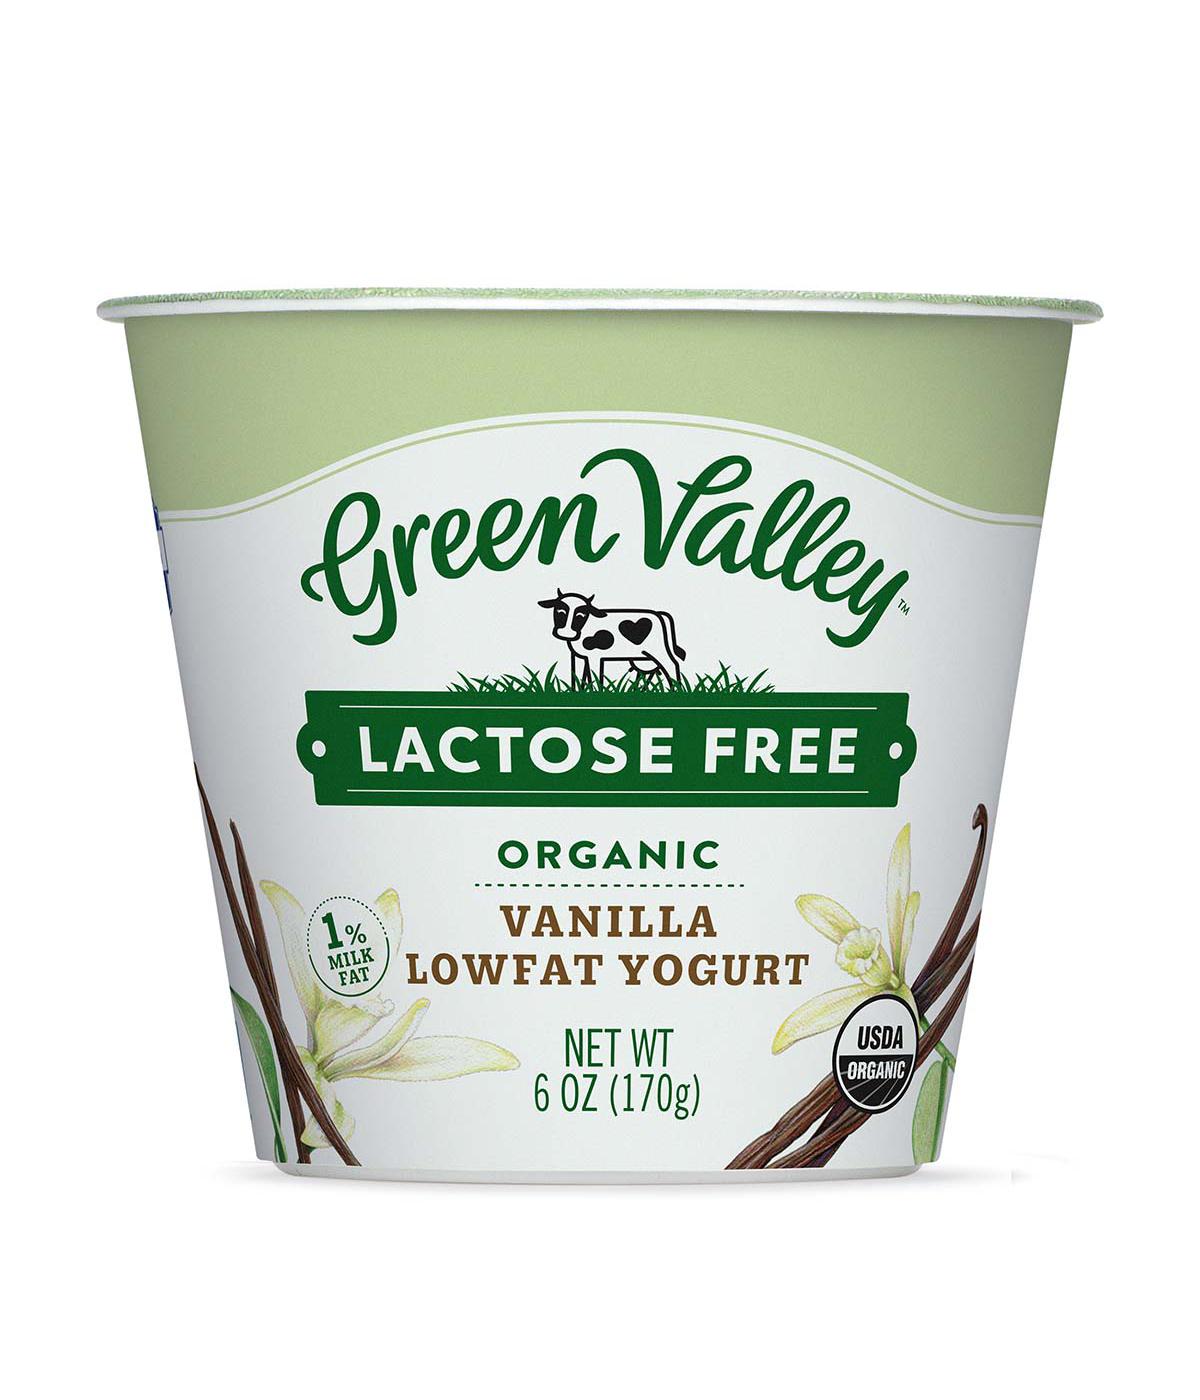 Green Valley Lactose Free Organic Lowfat Vanilla Yogurt; image 1 of 8